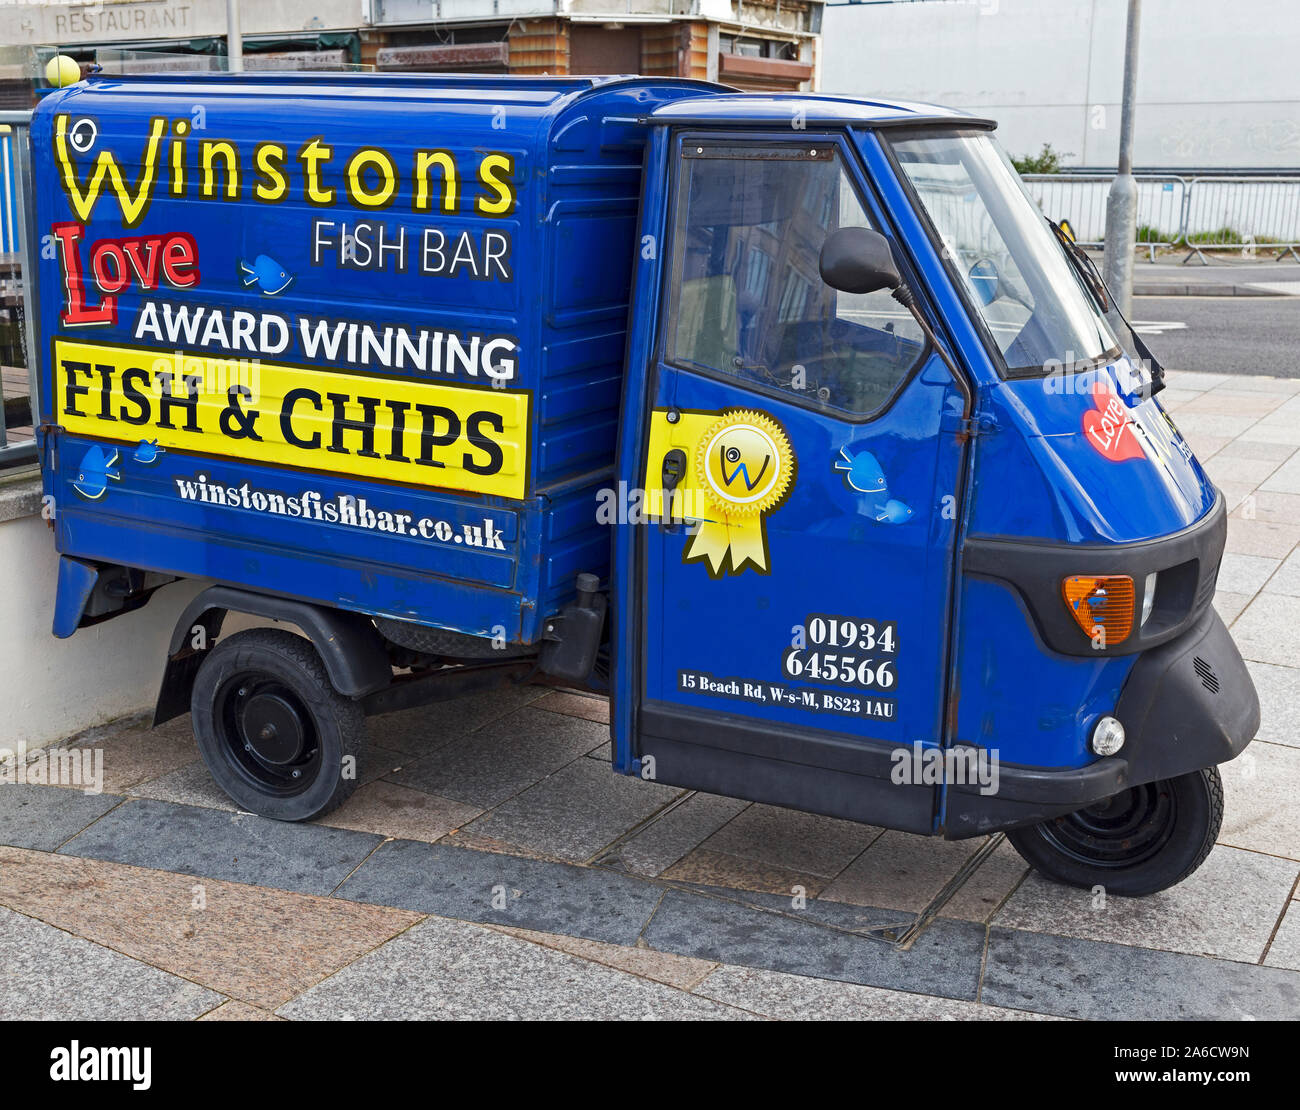 A three-wheeled van advertising Winston’s Fish Bar in Weston-super-Mare, UK Stock Photo